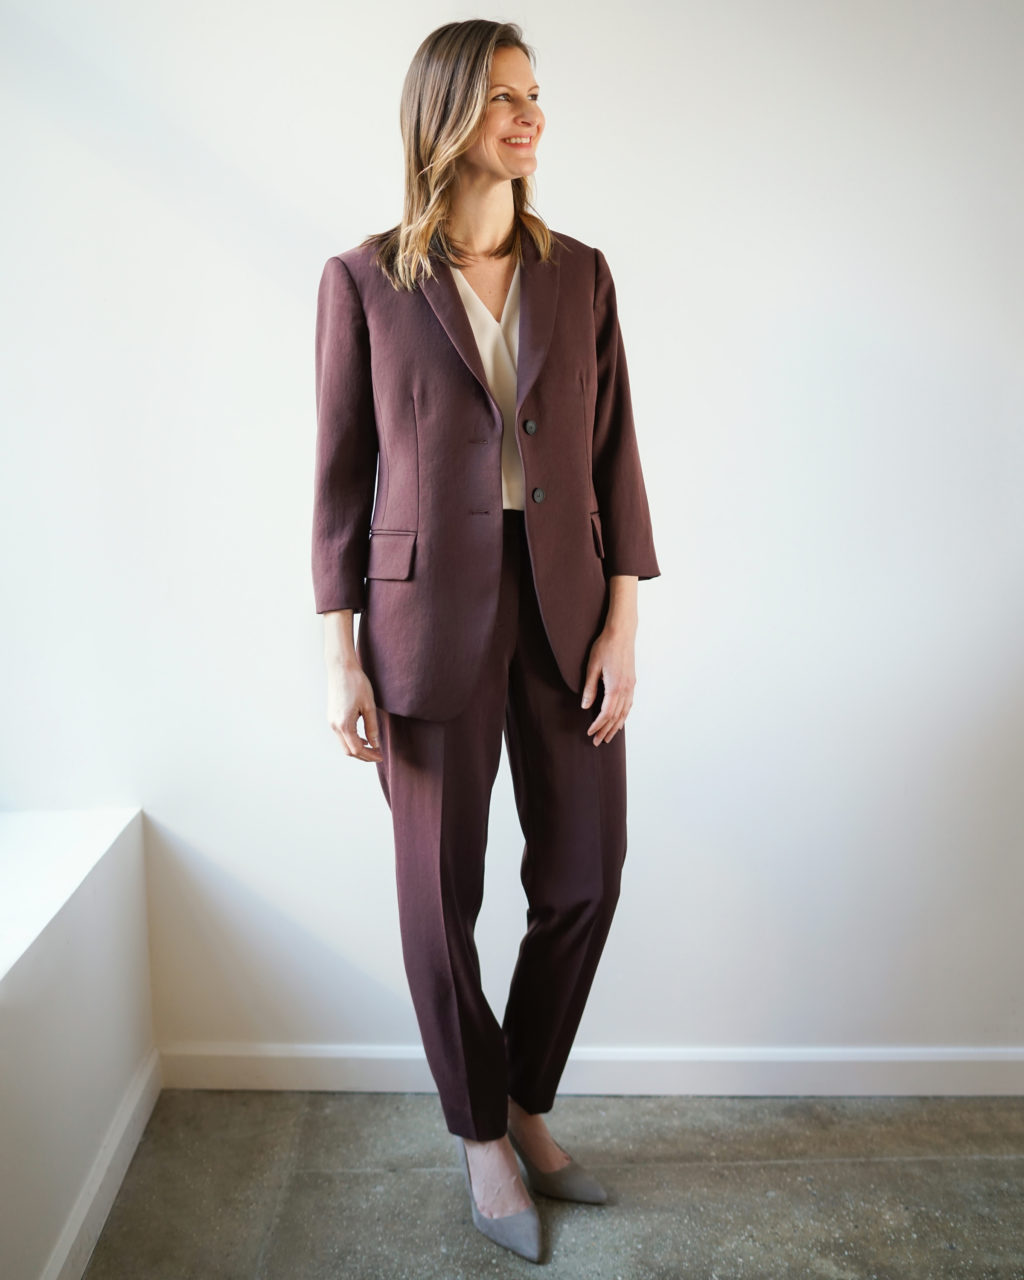 fashionable women's suits